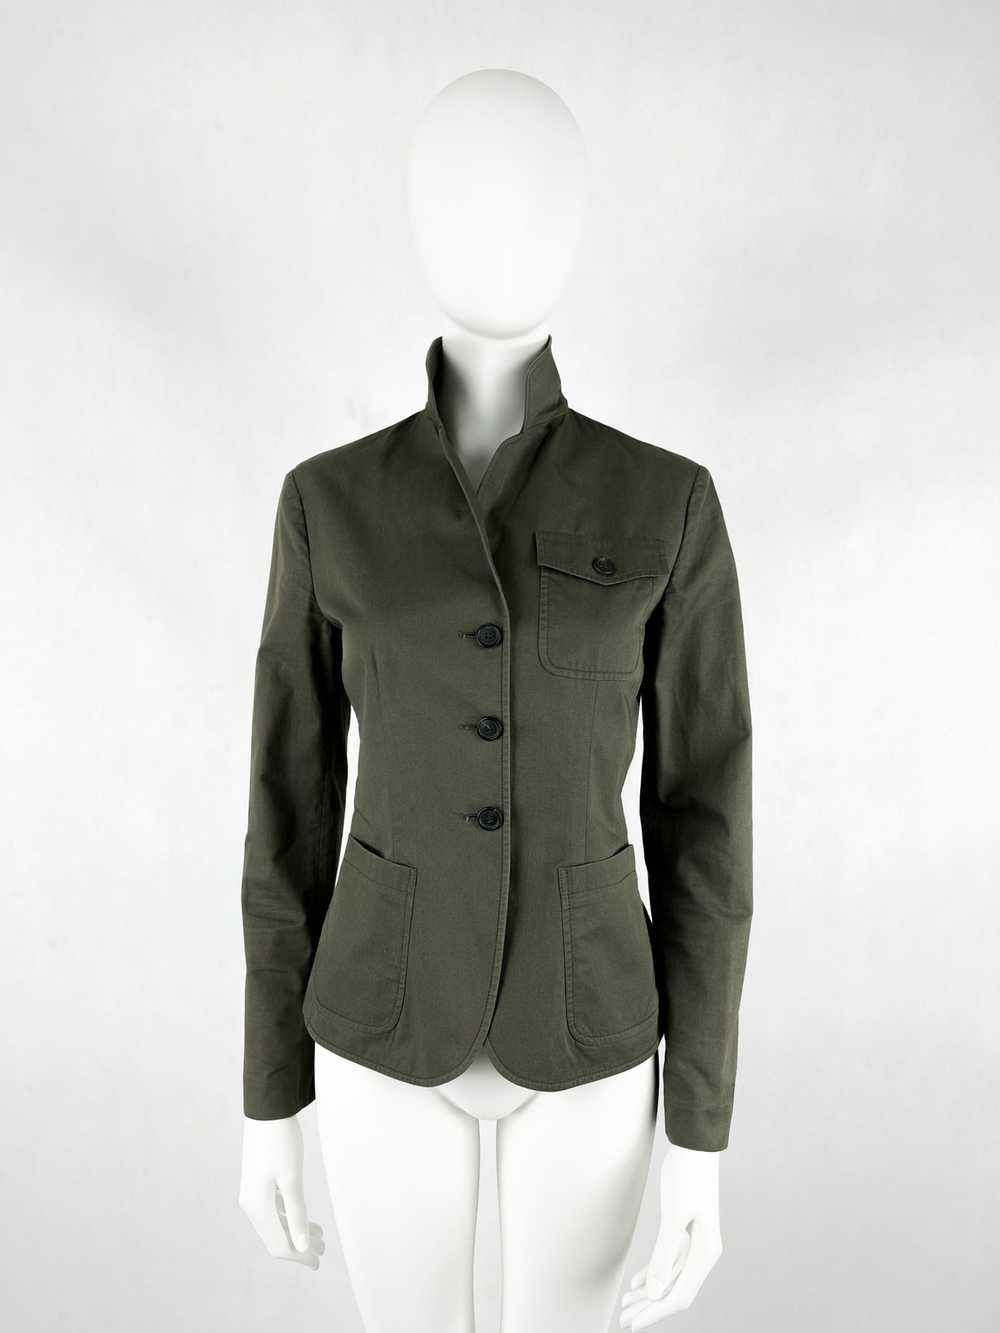 Prada Prada olive green blazer jacket - image 5